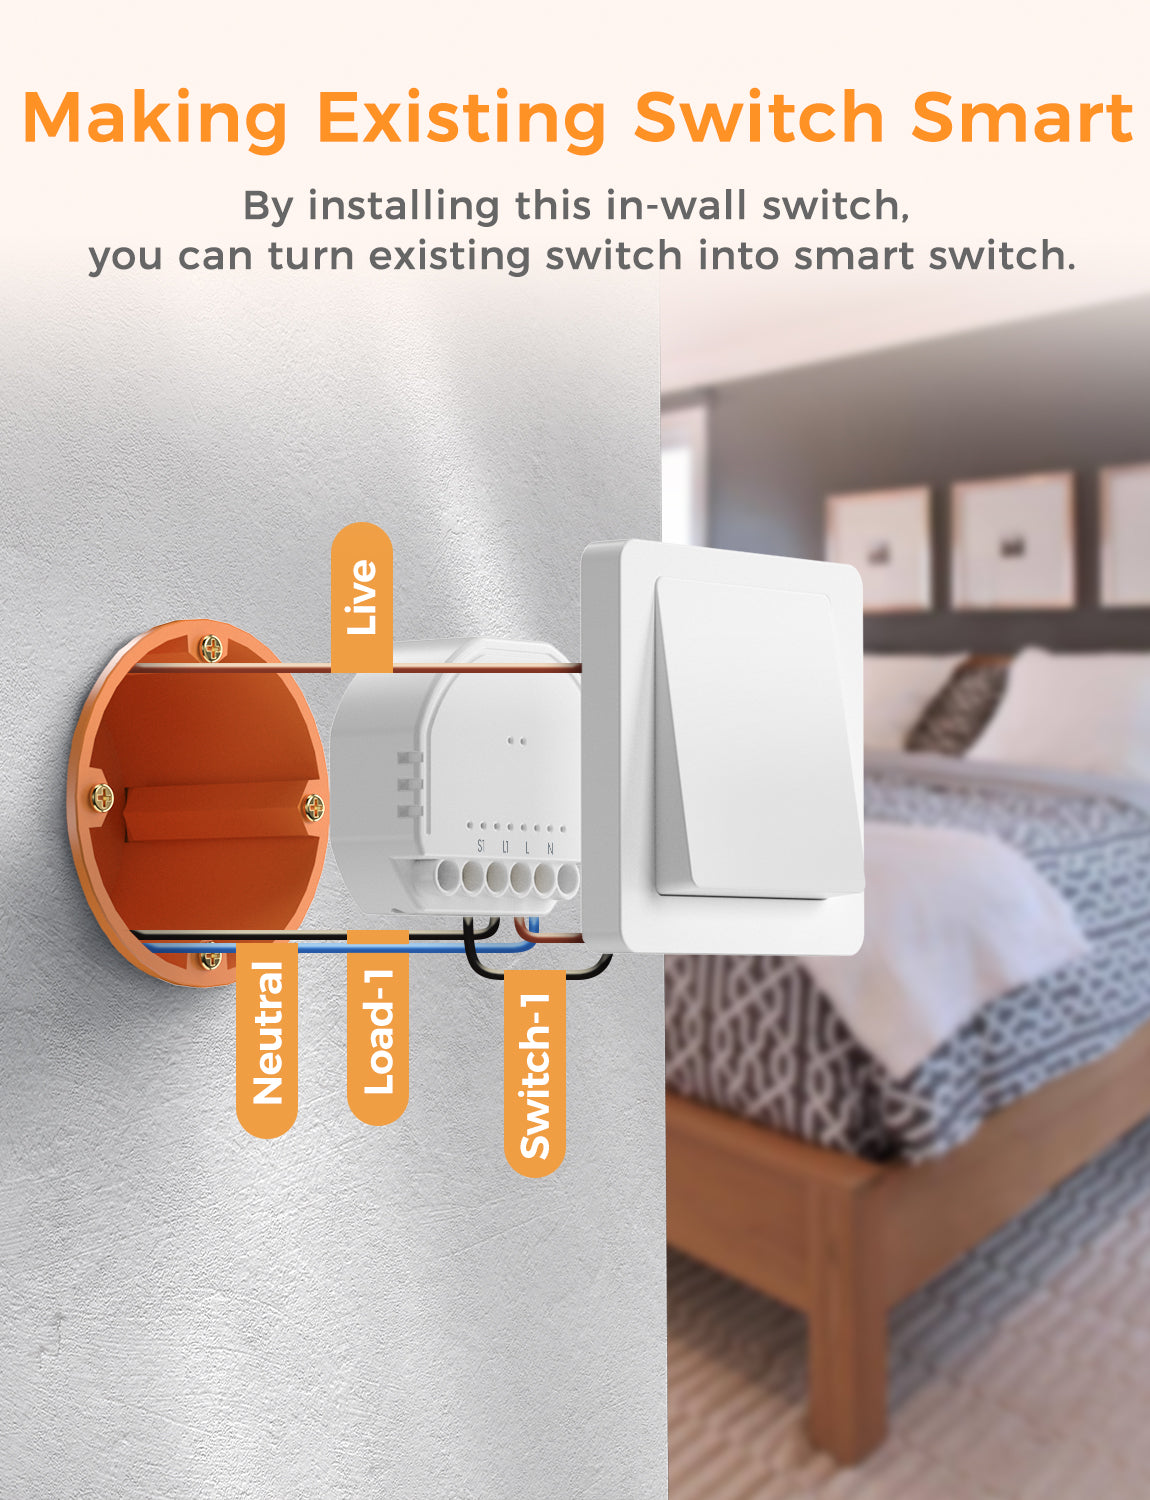 Refoss Smart Wi-Fi In-Wall Switch